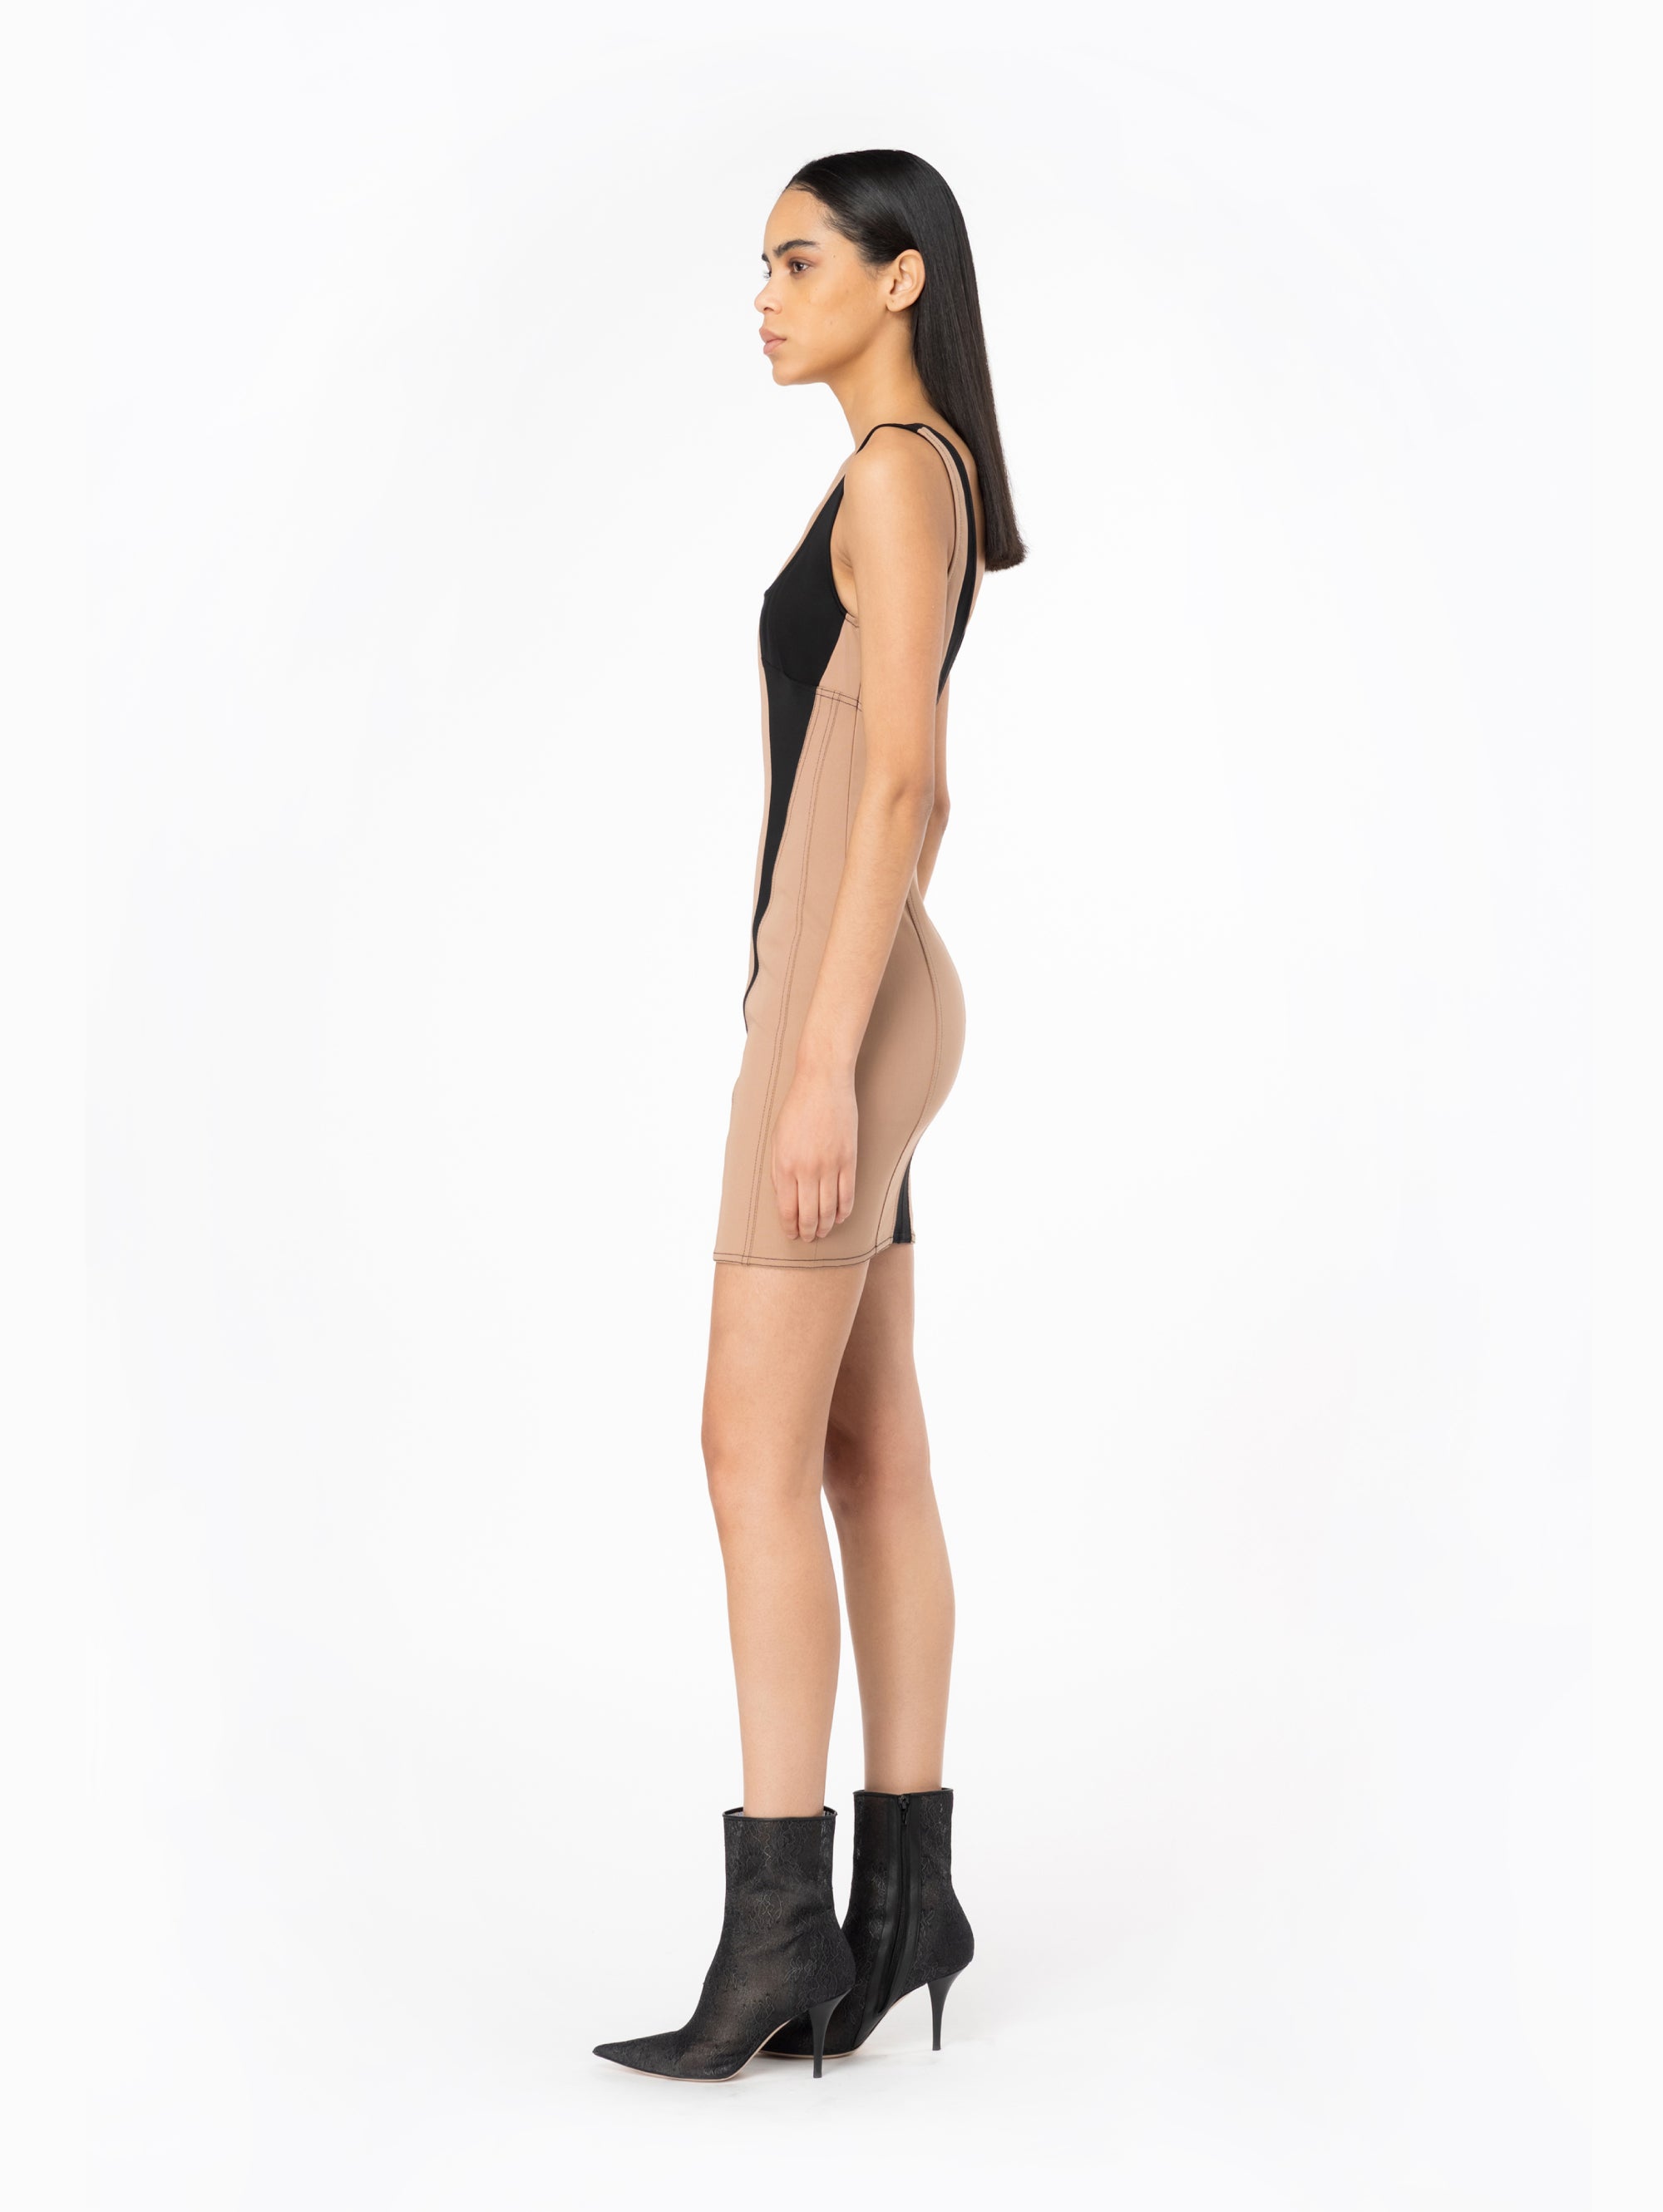 Slim-fitting mini dress in hazelnut/black double material